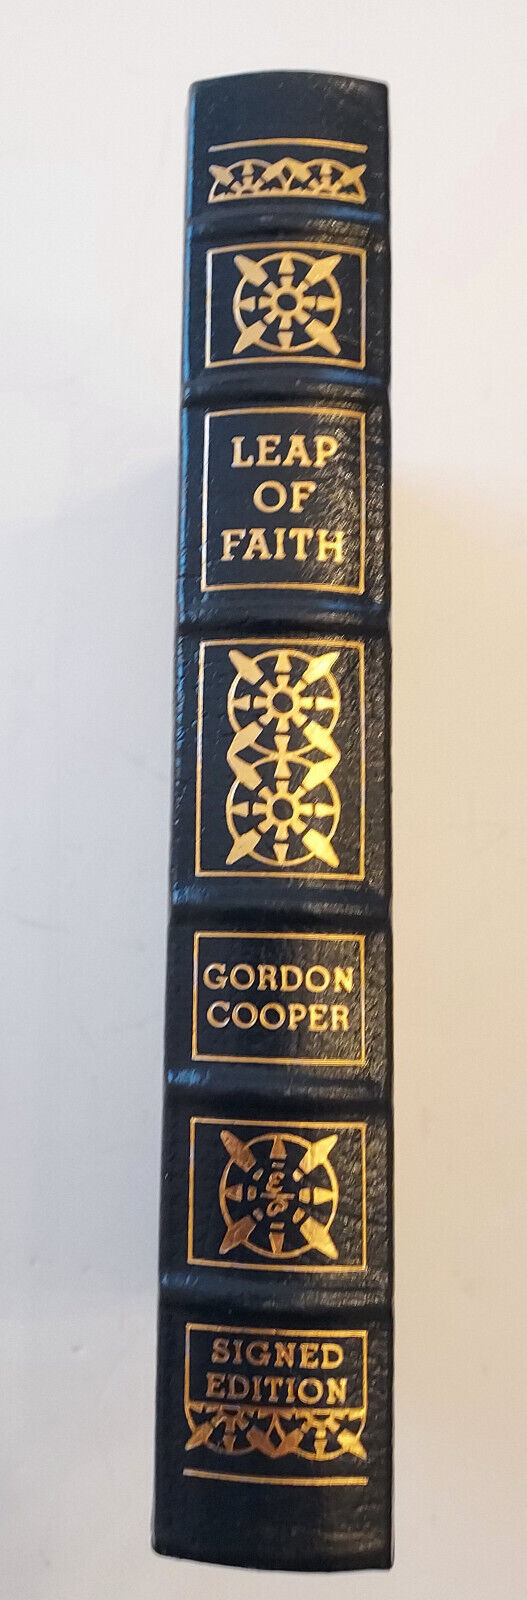 Easton Press Leap of Faith Gordon Cooper - Signed  Collectors Edition